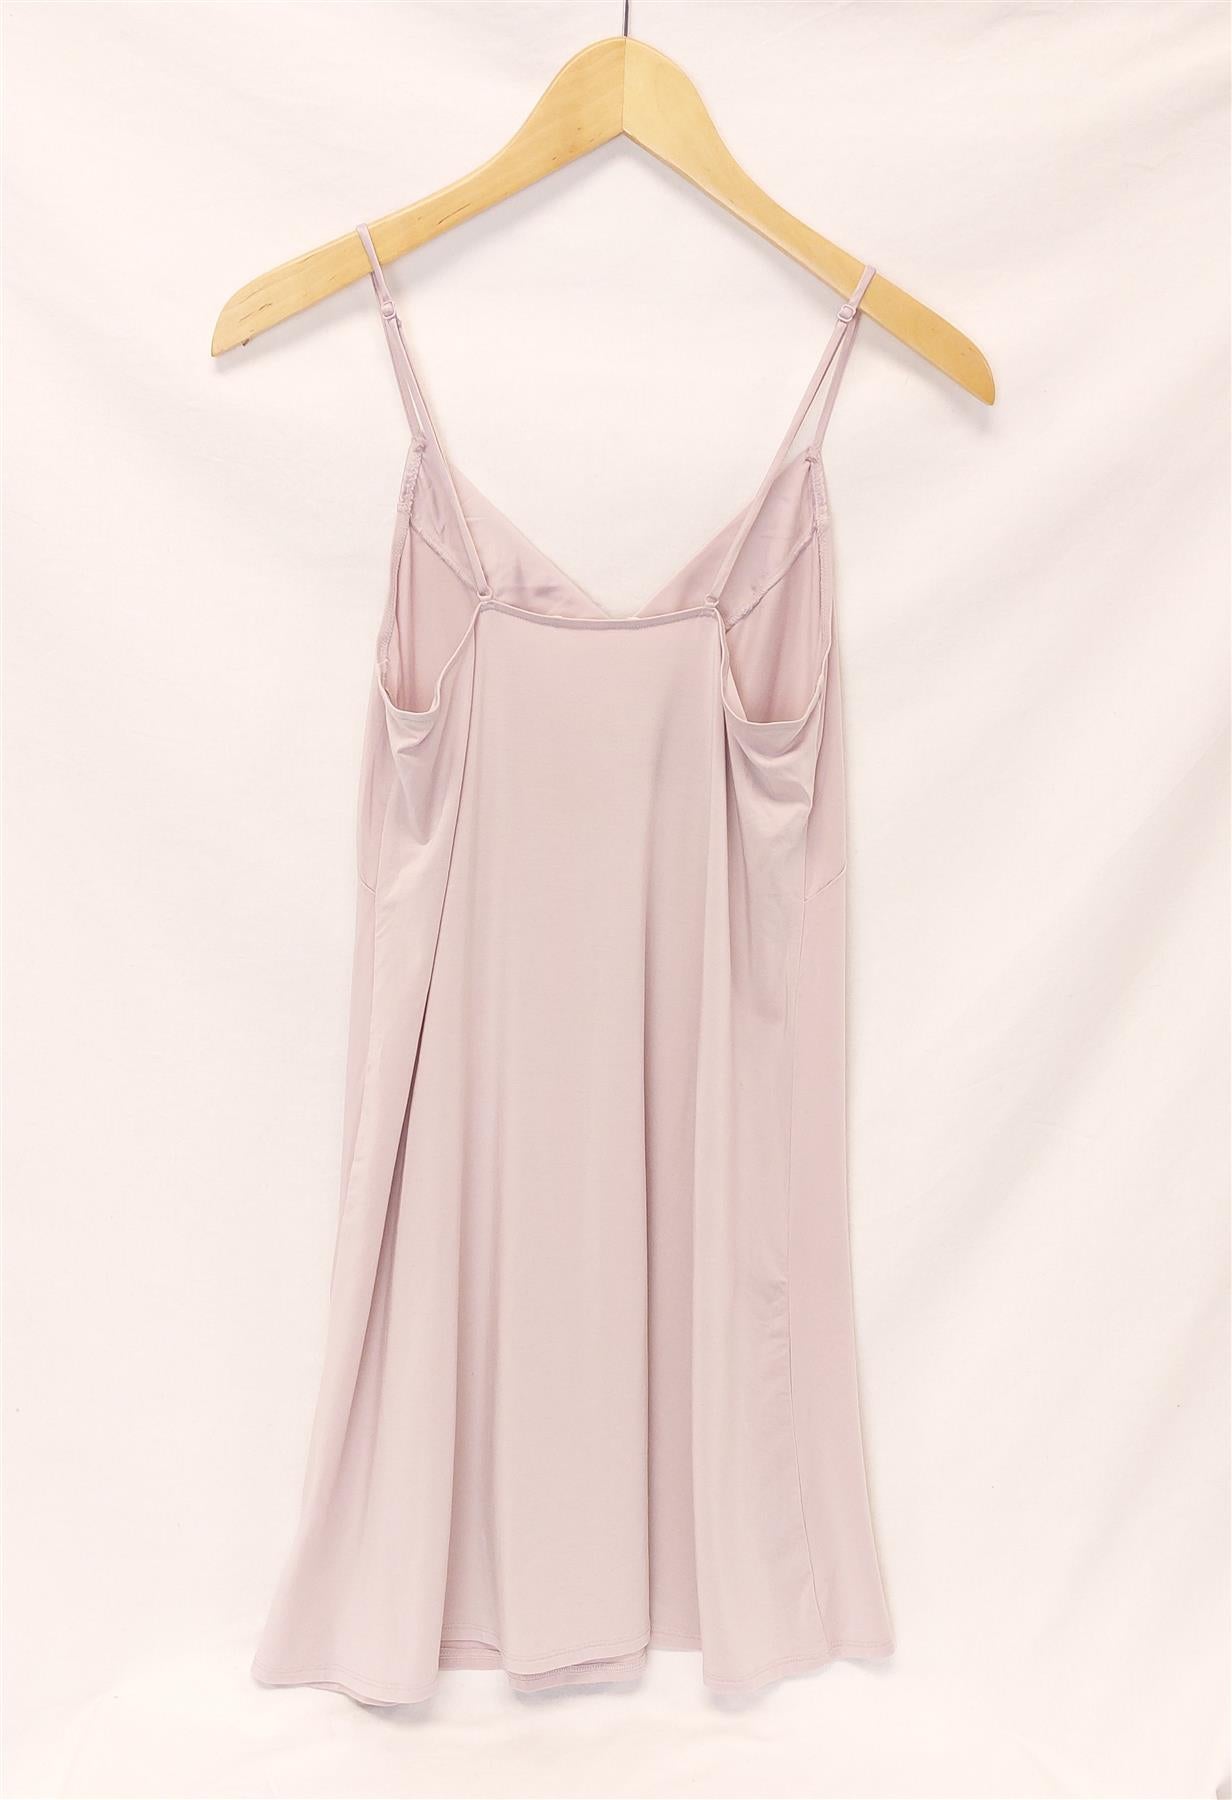 Women's Supersoft Nightdress Slip Summer Pyjama Light Strappy Sleepwear Brand New